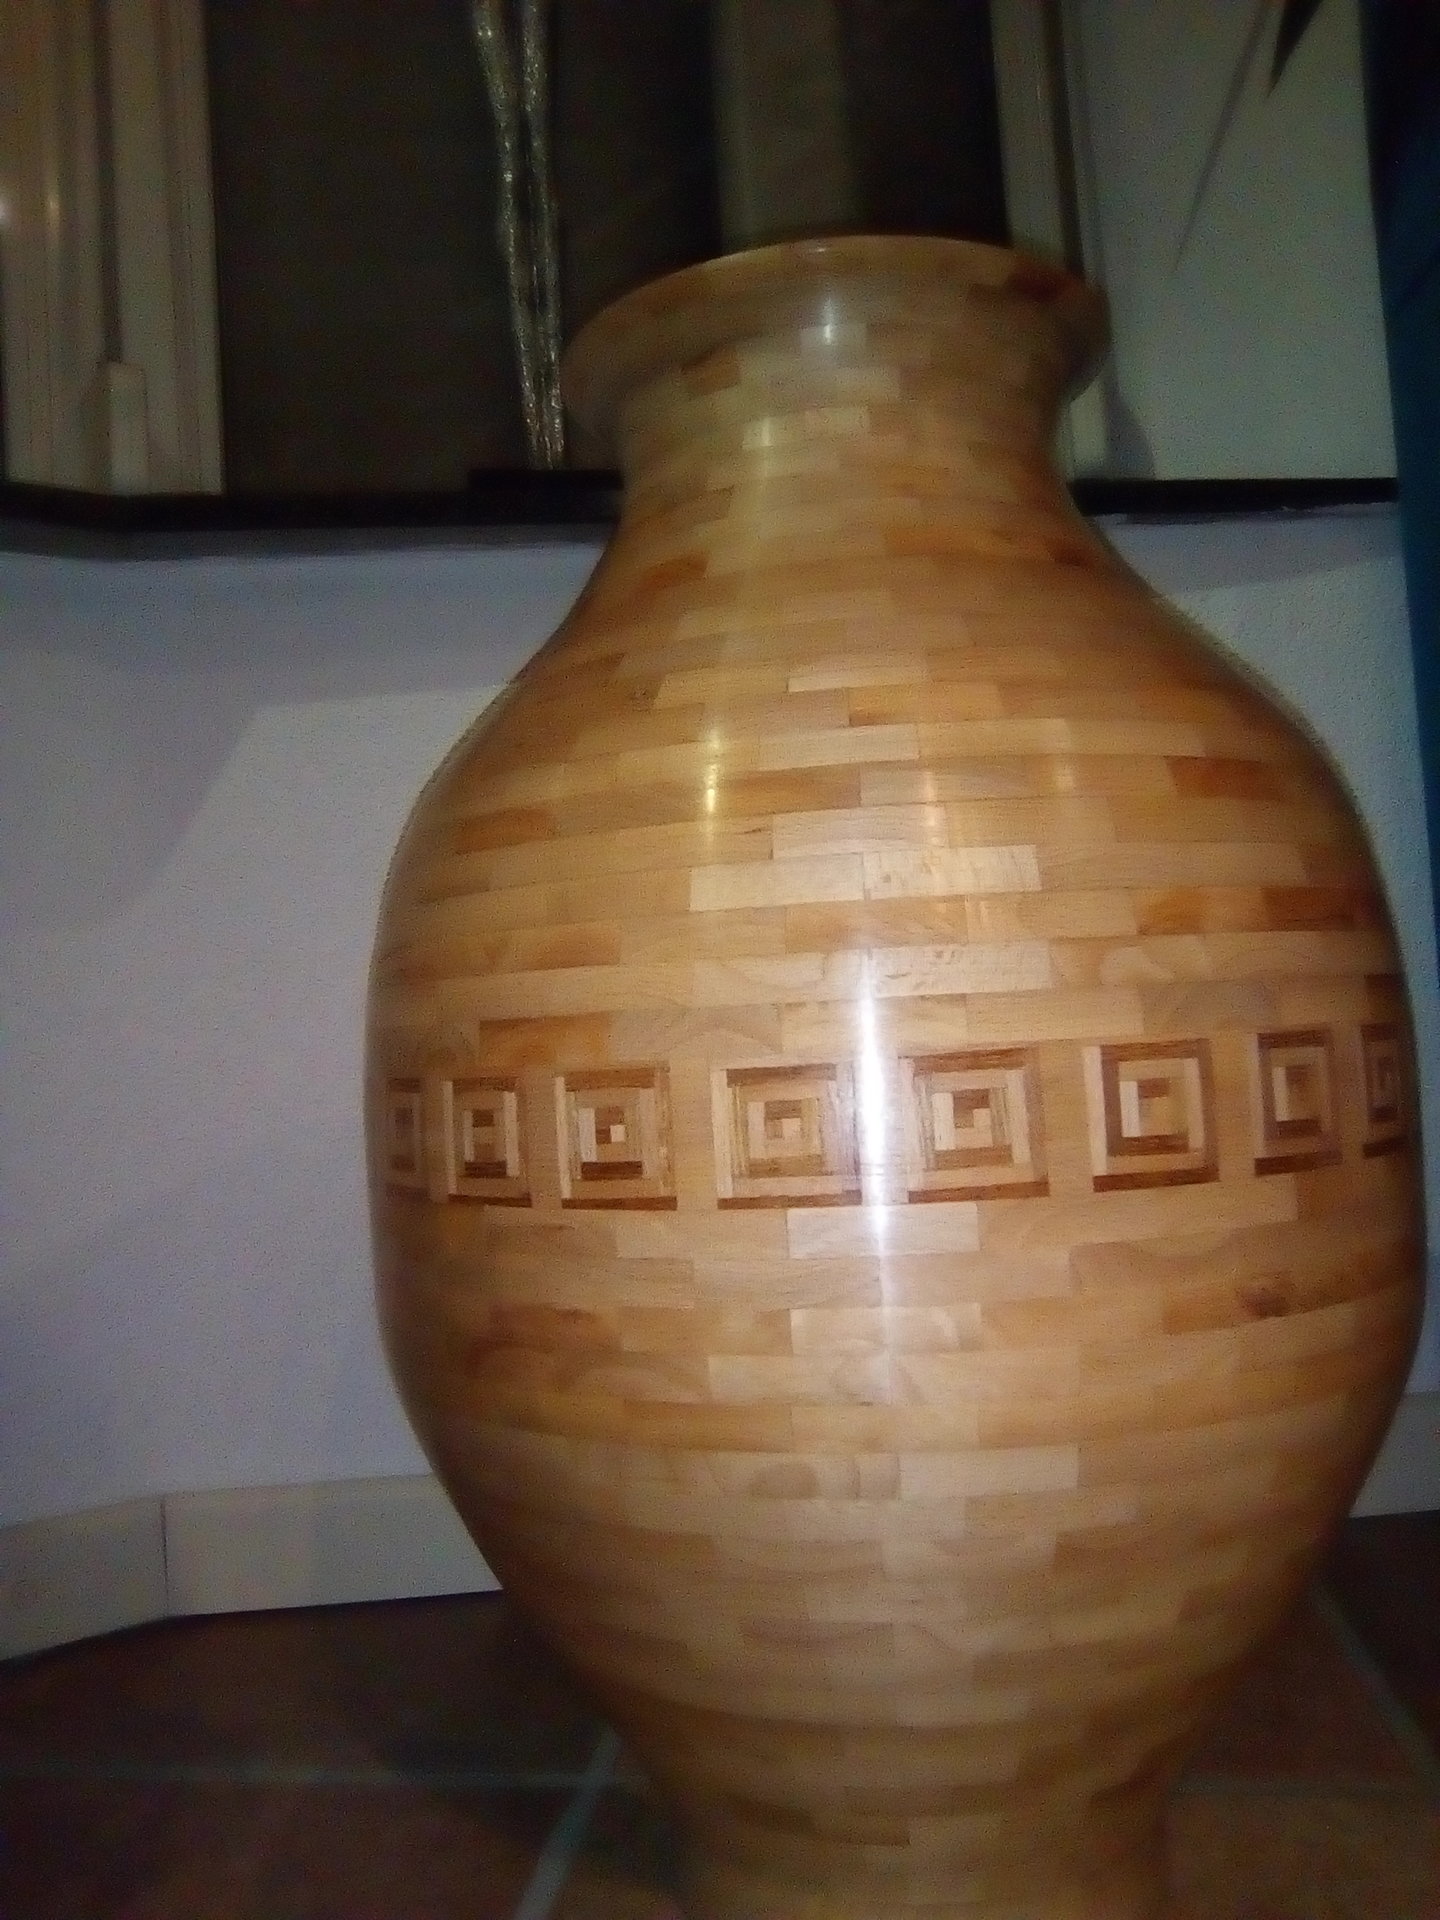 Beech vase